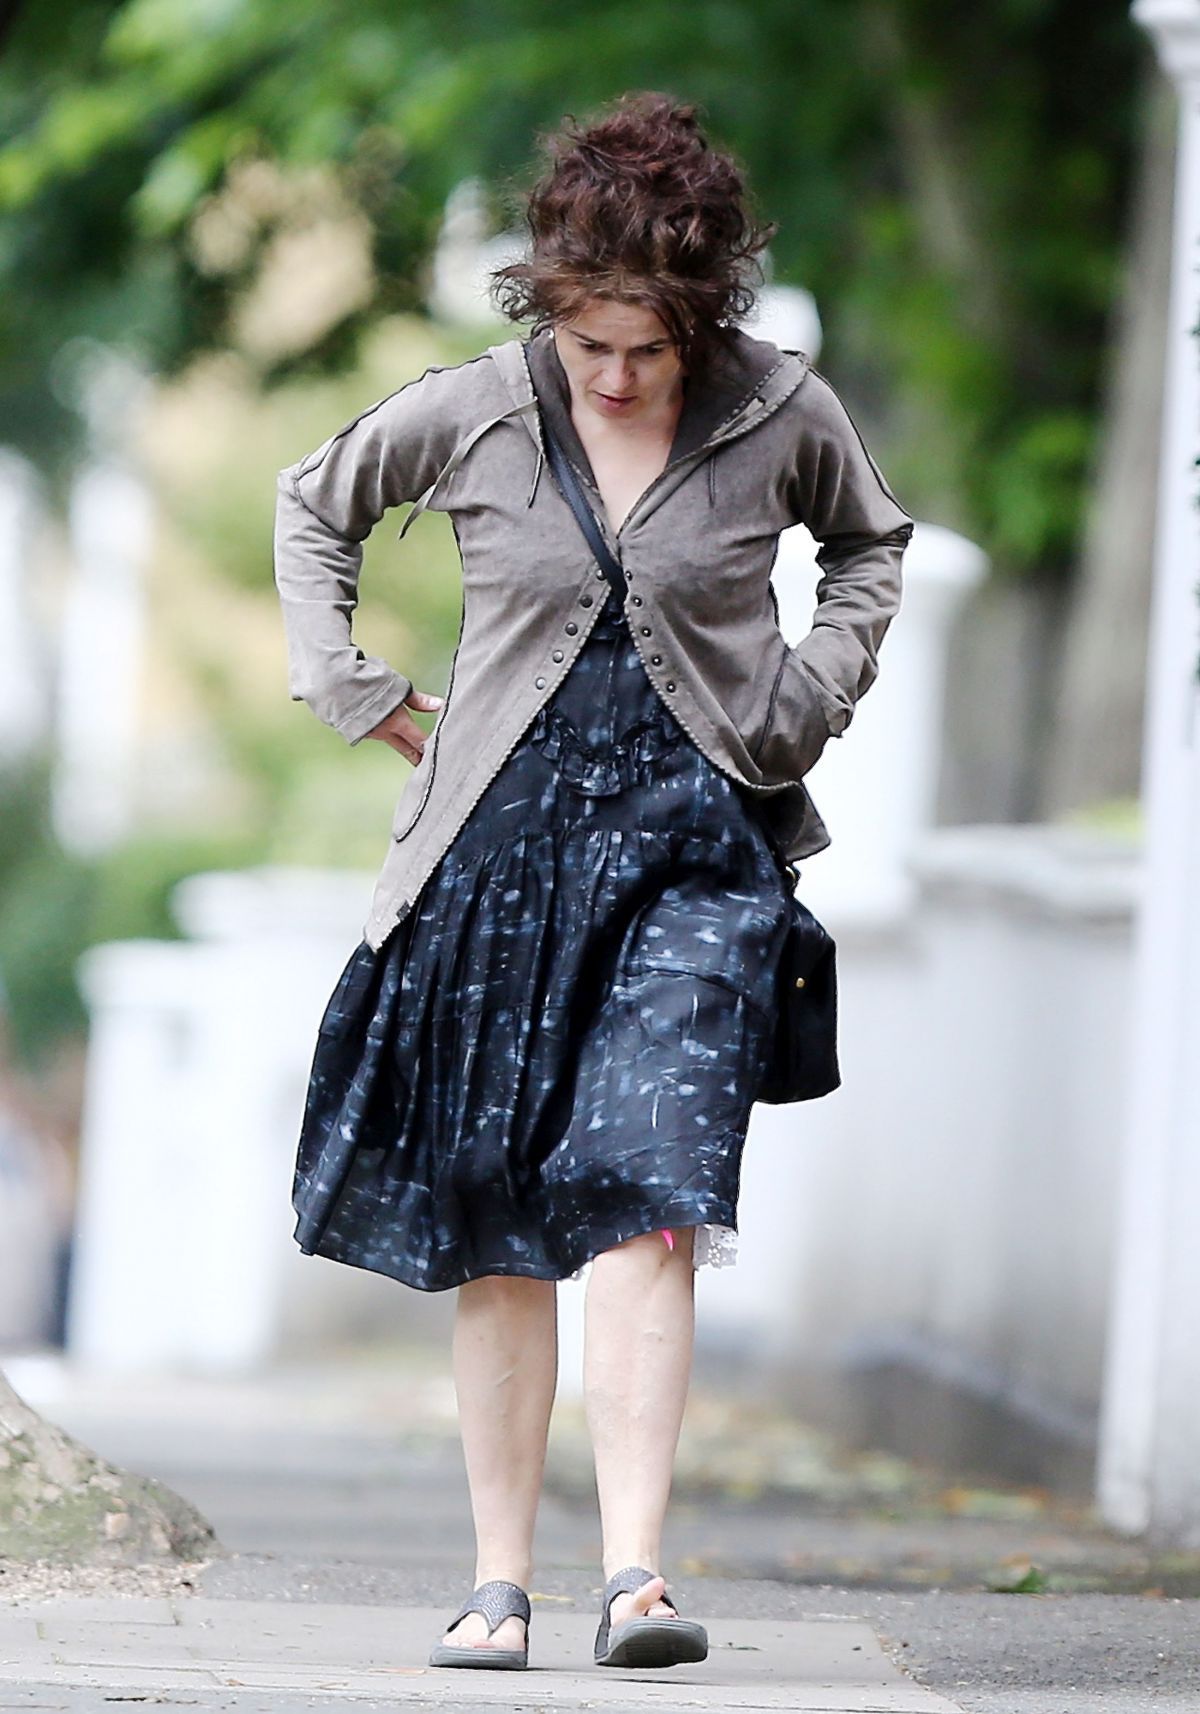 Helena Bonham Carter Legs